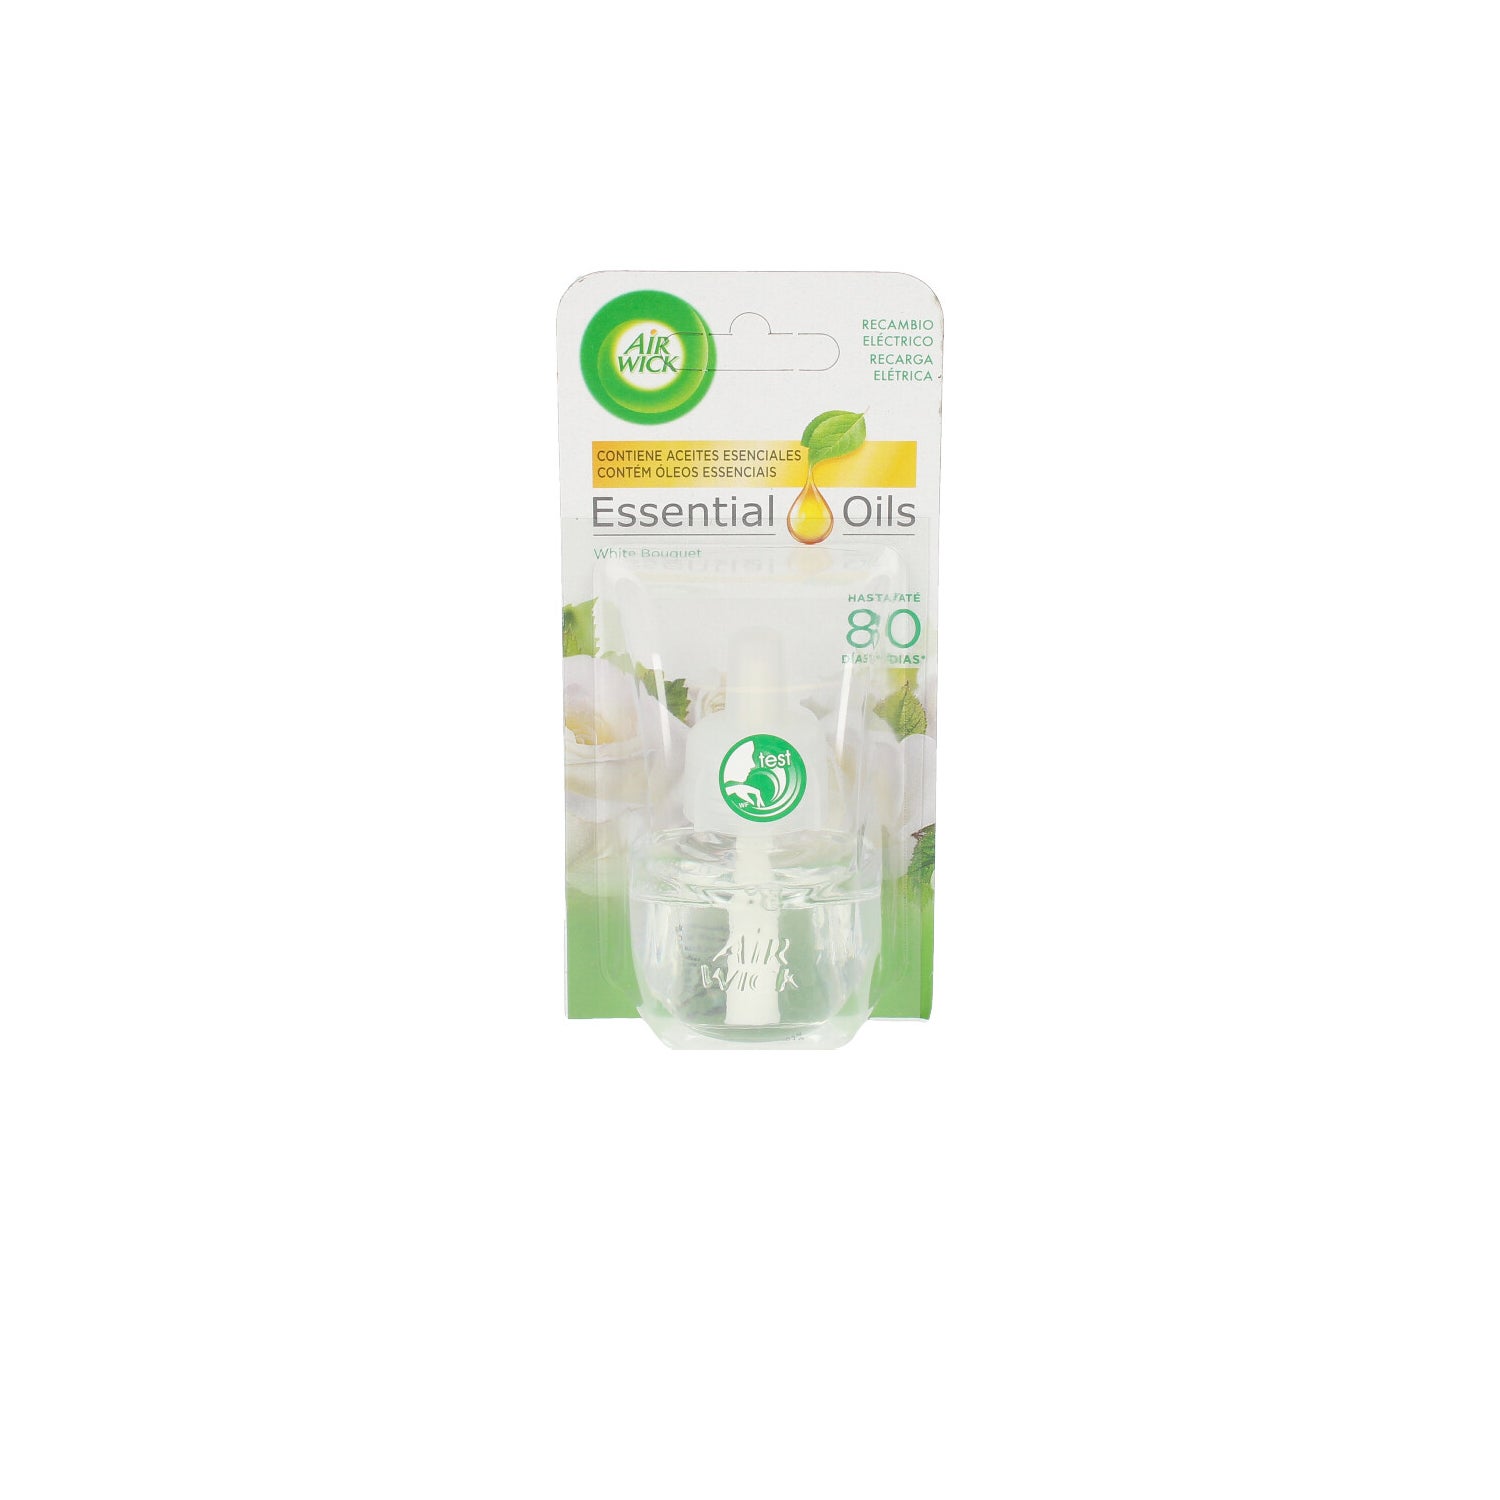 Air Wick® Freshmatic Essential Oils - White Bouquet